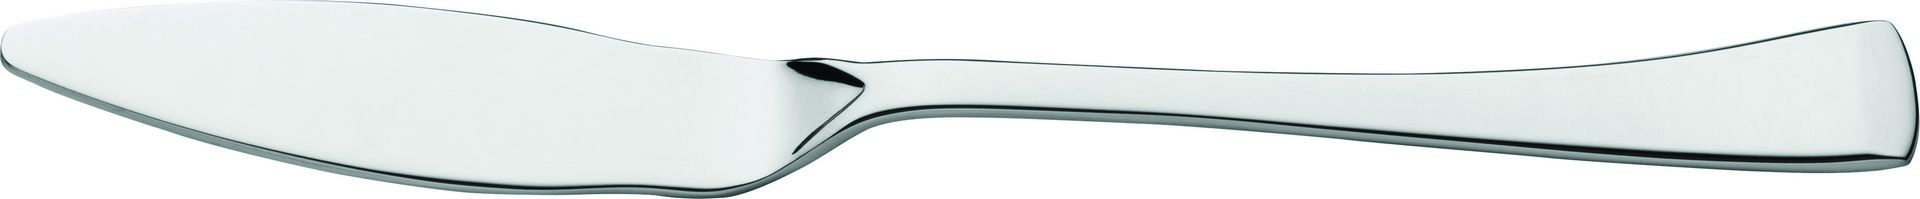 Mahé Fish Knife - F13014-000000-B01012 (Pack of 12)